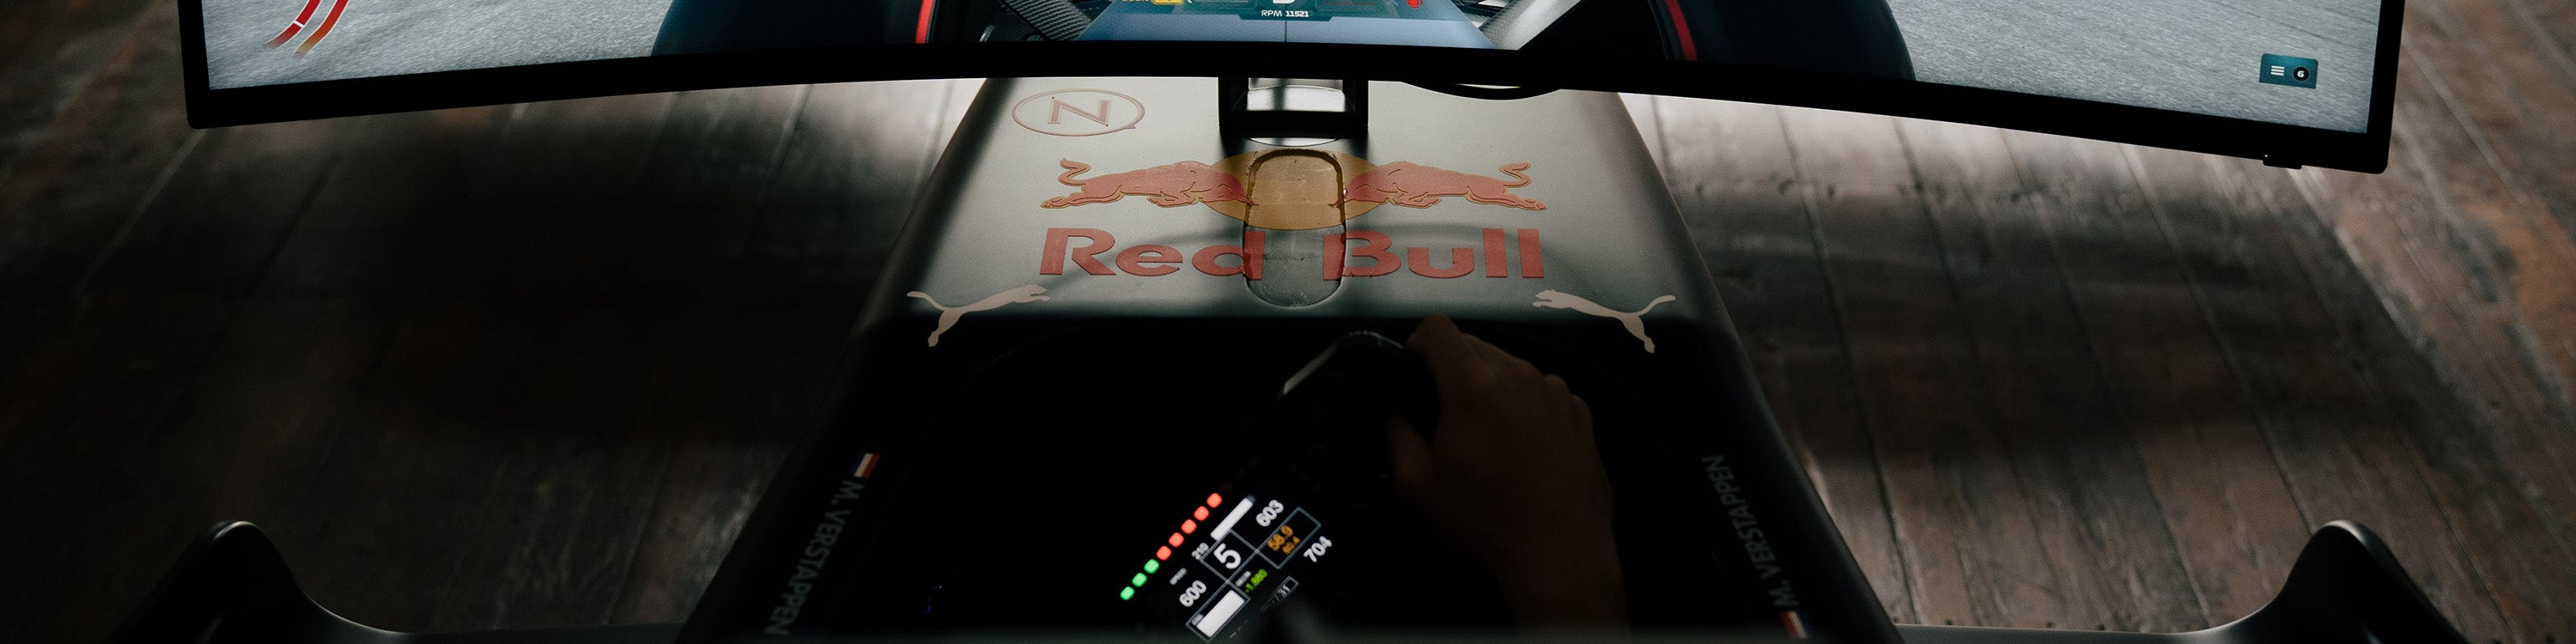 Oracle Red Bull Racing F1 Simulator Draws Crowds At Caffeine & Machine